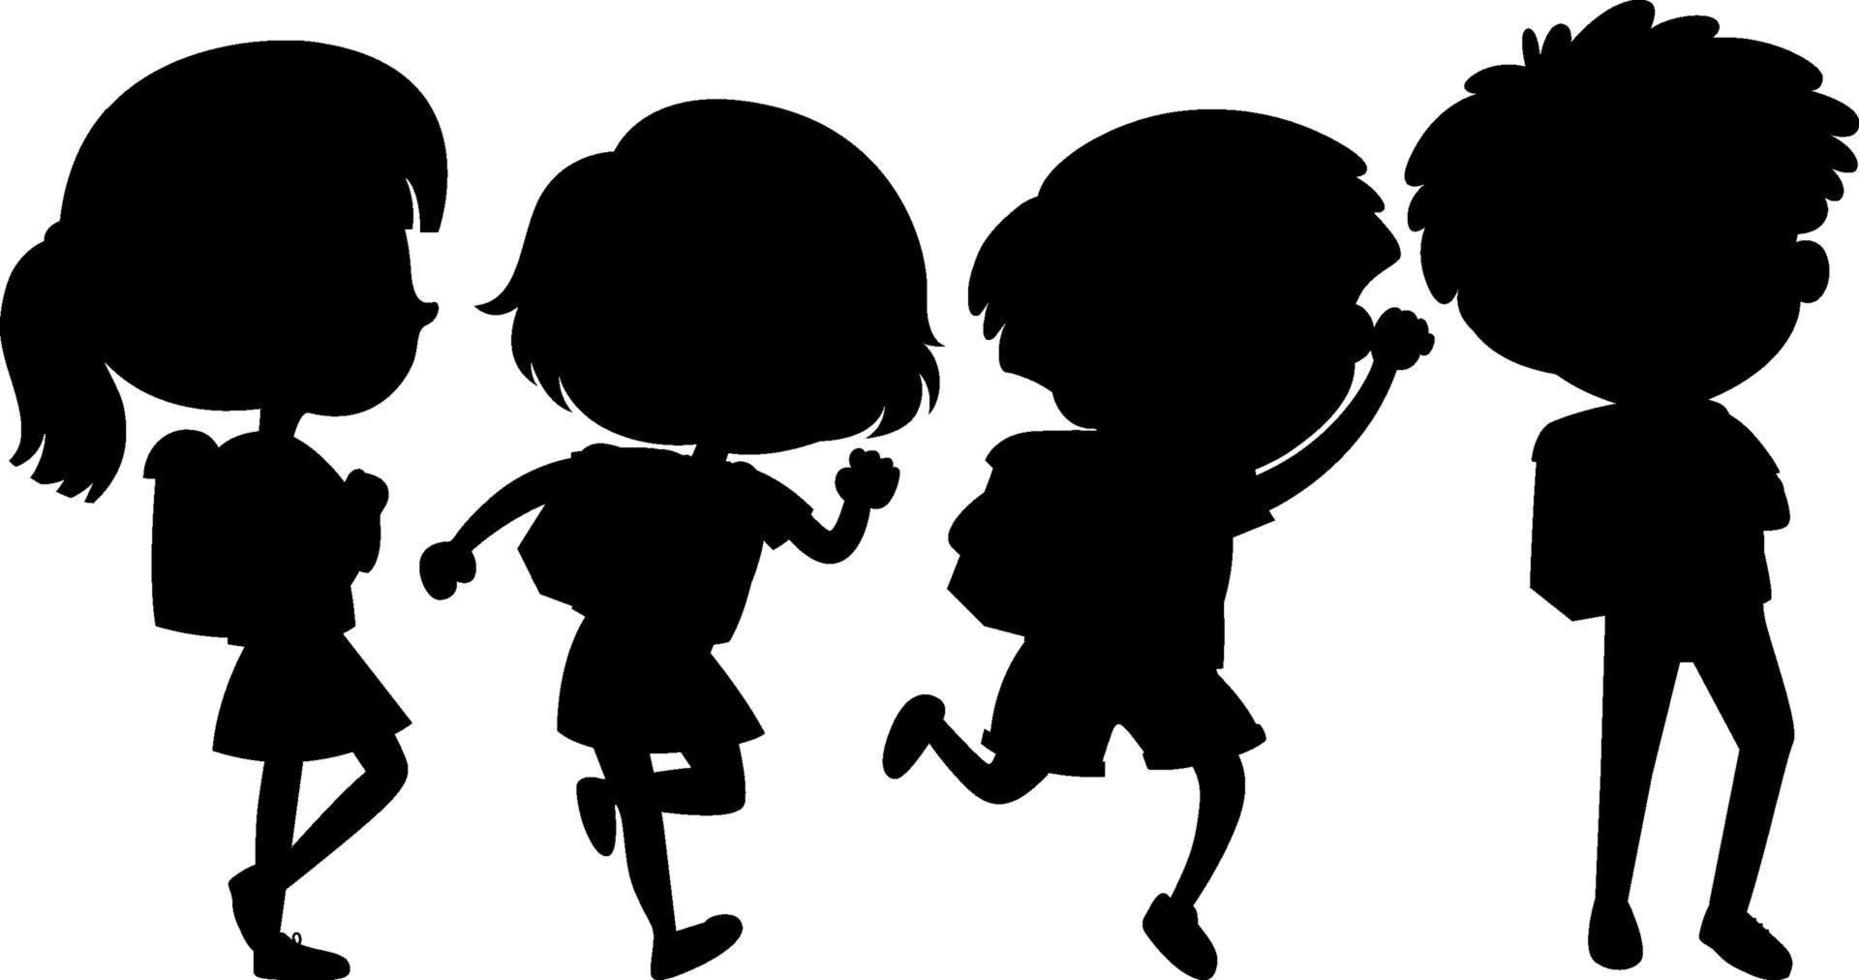 Set of kids silhouette cartoon character vector